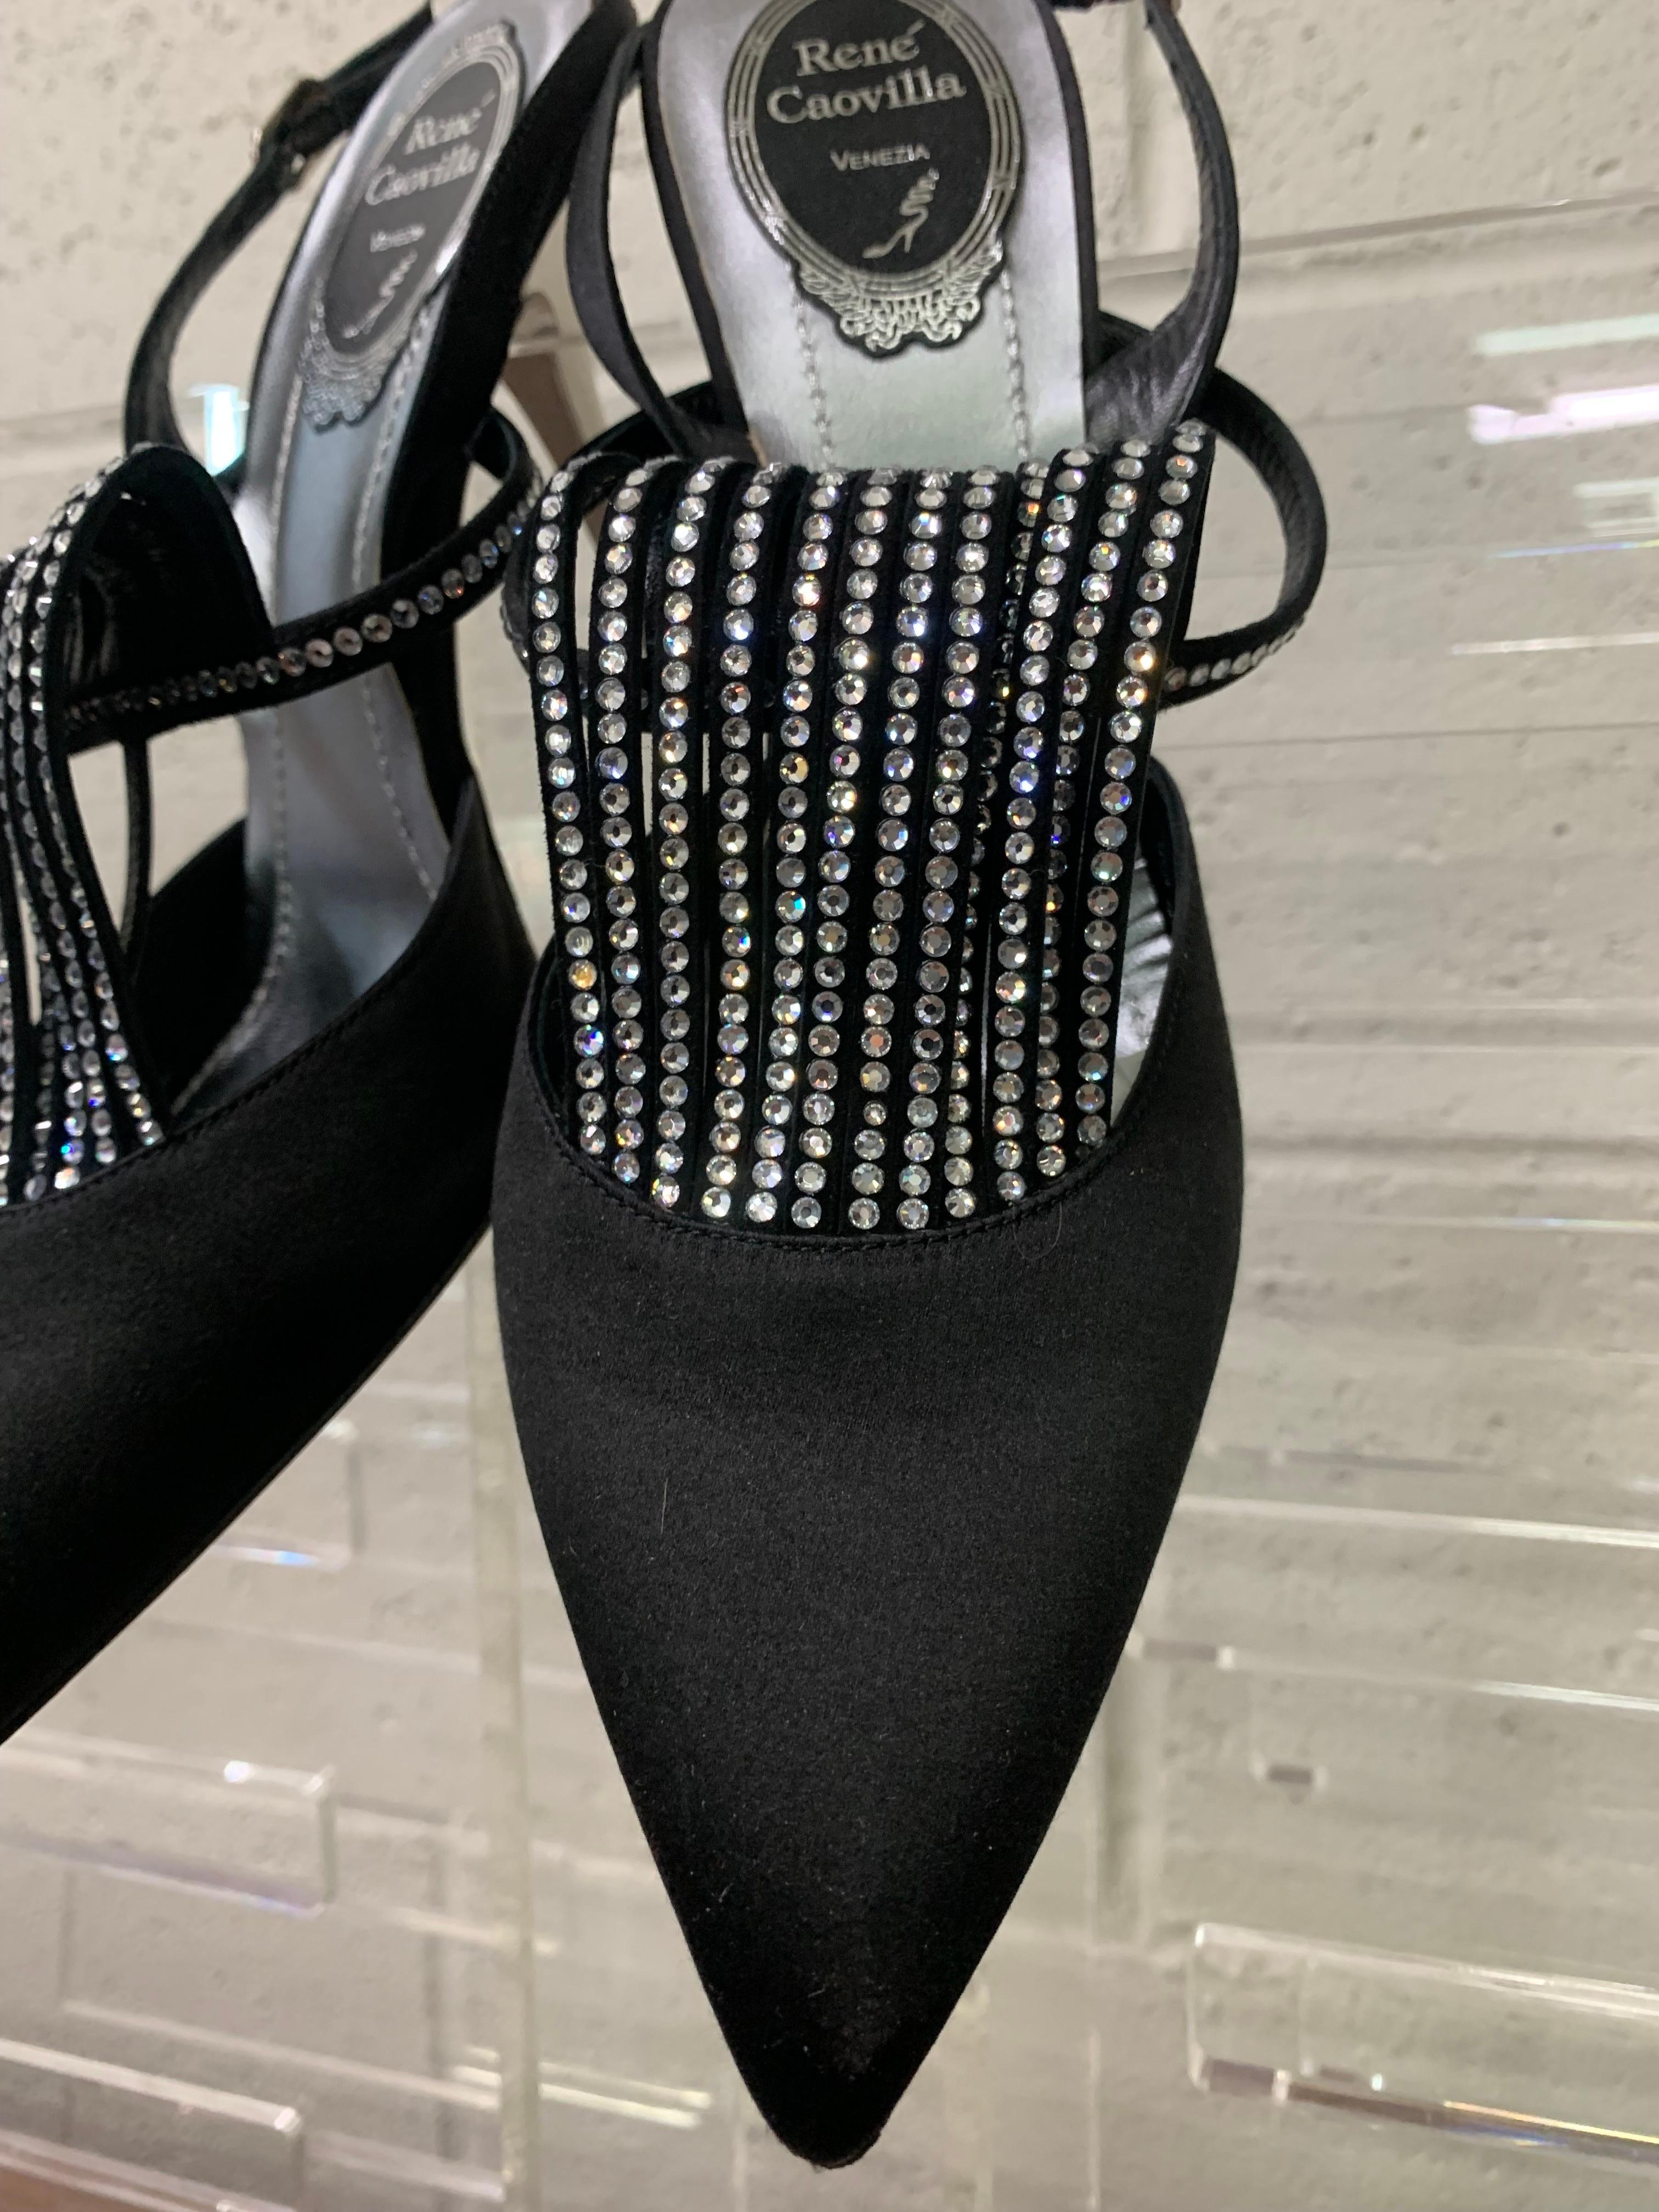 rene caovilla heels black